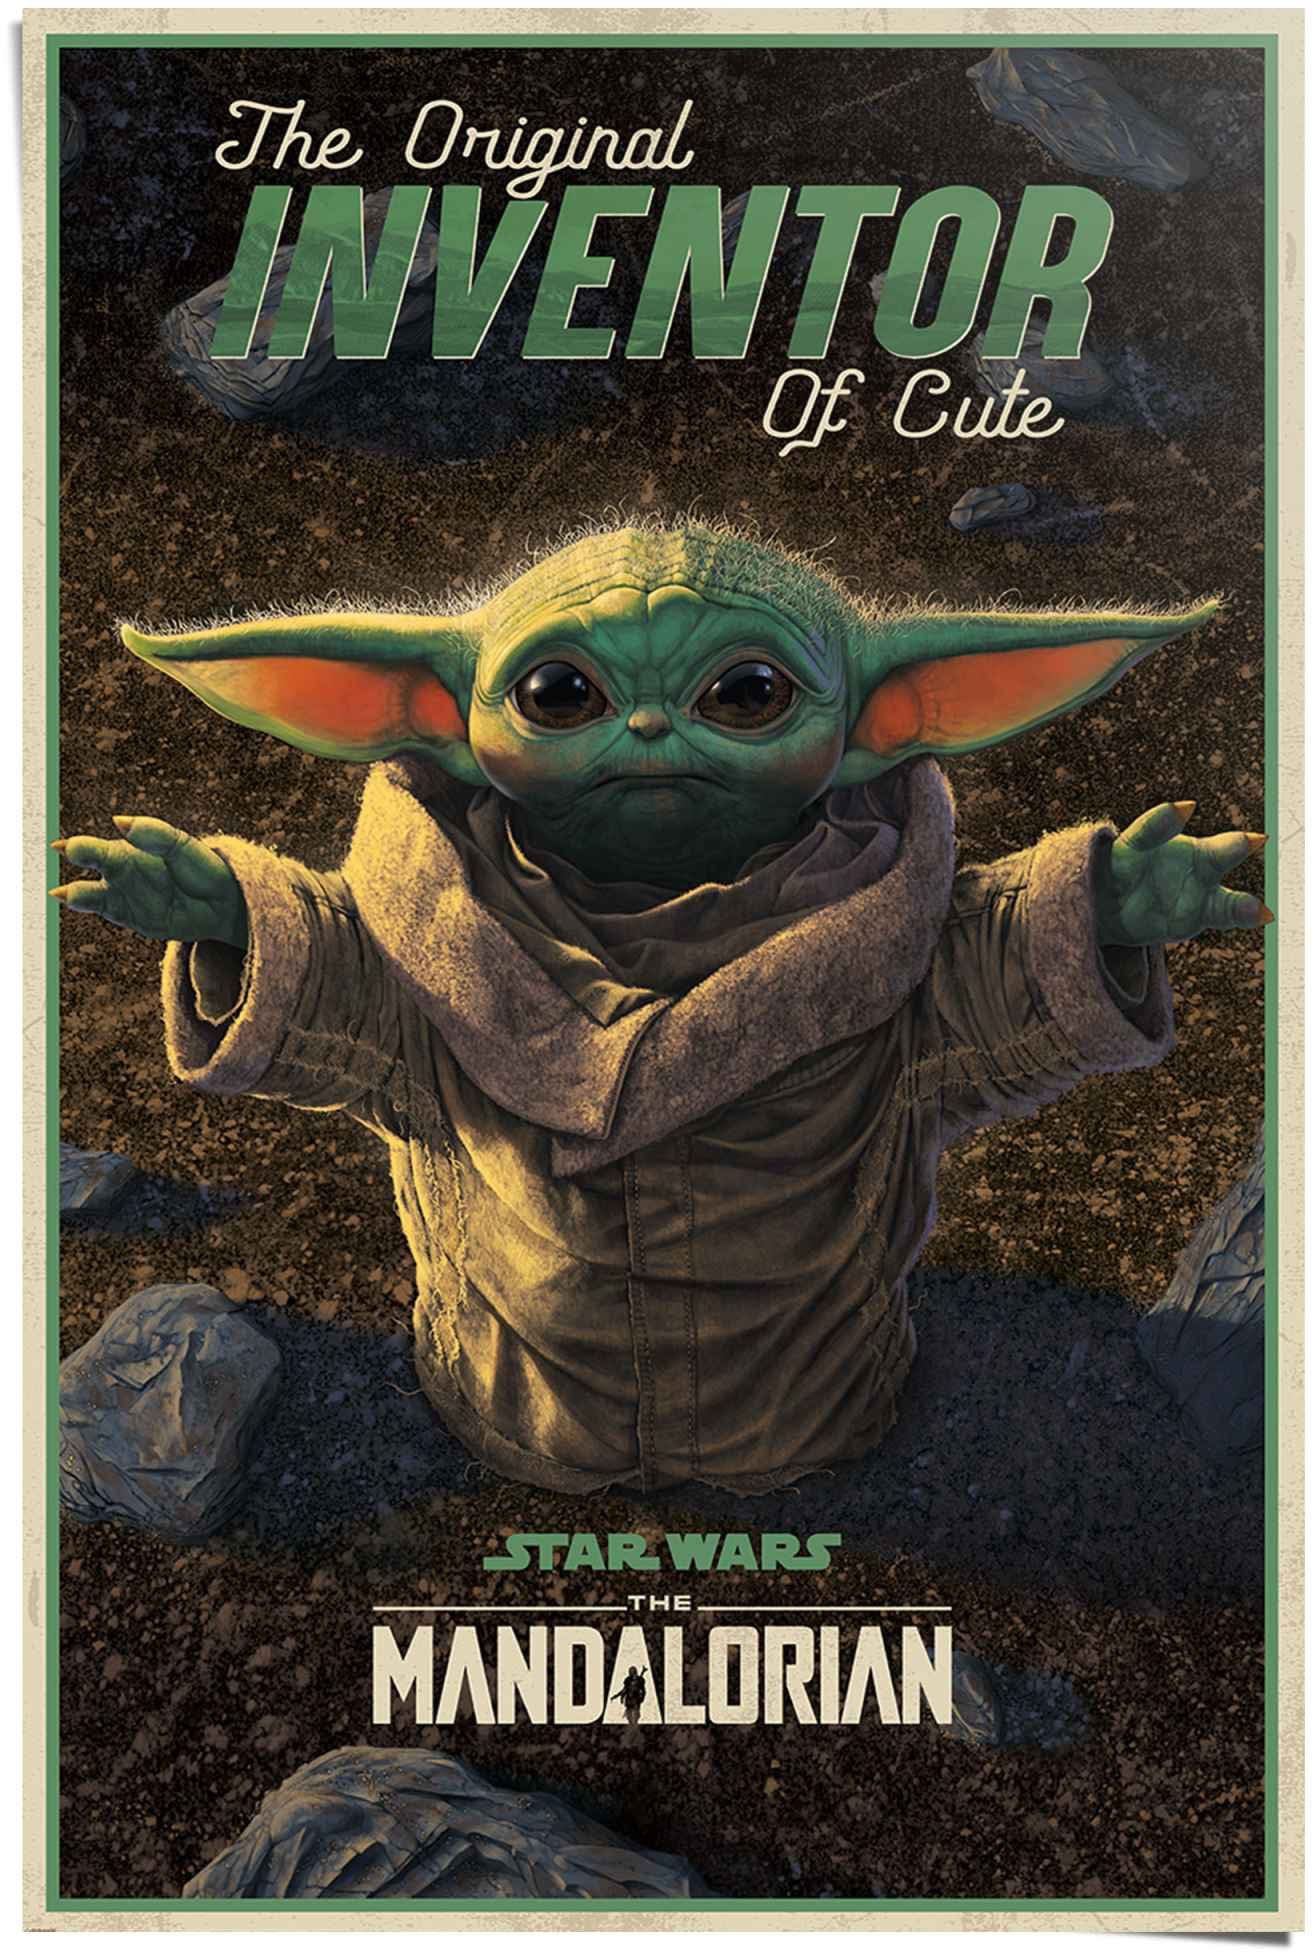 Star Baby The (1 - Poster - Mandalorian St) Reinders! Serie Wars Yoda,